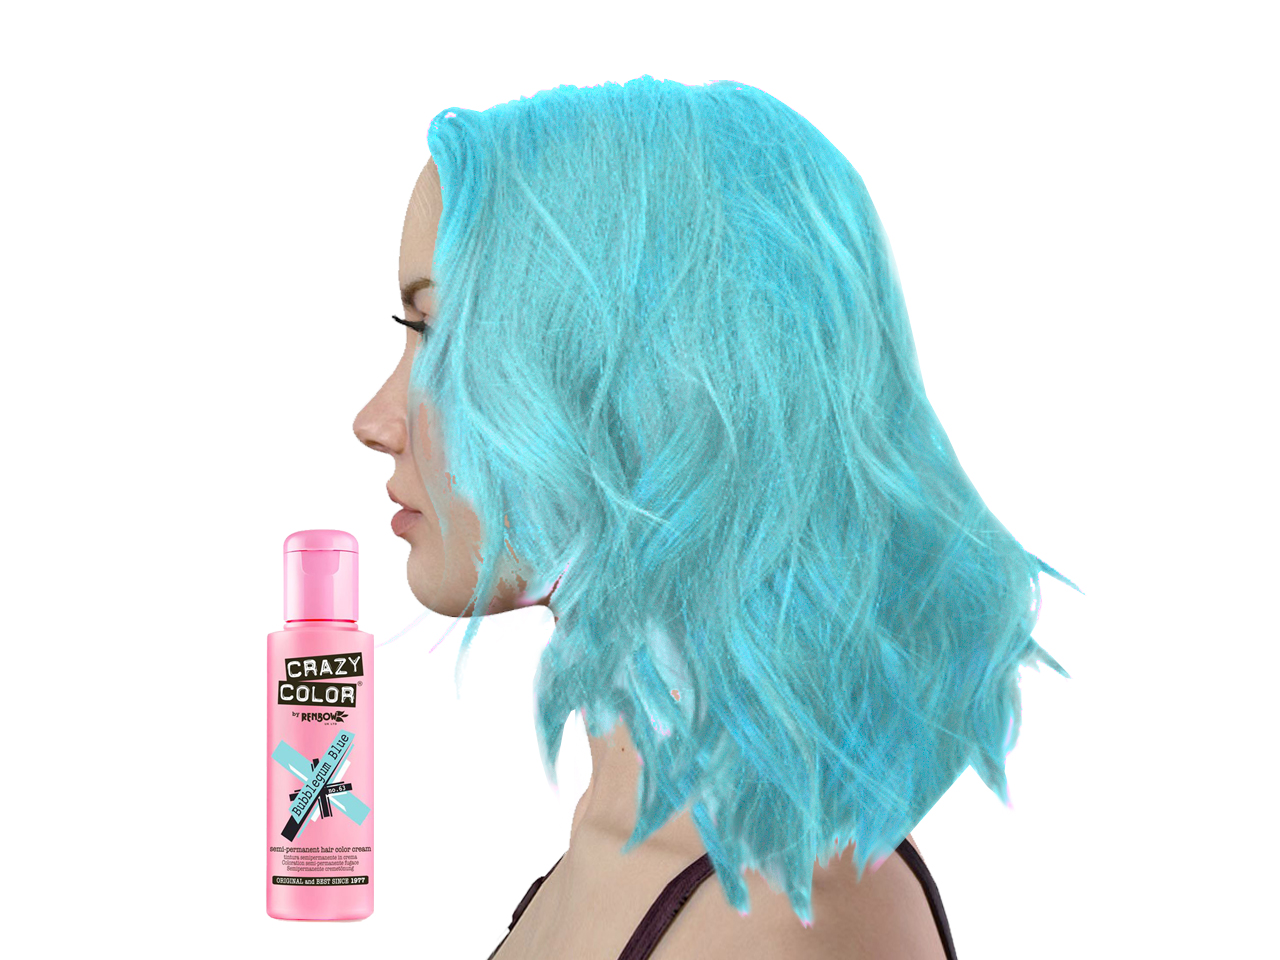 2. Crazy Color Blue Hair Dye - wide 5